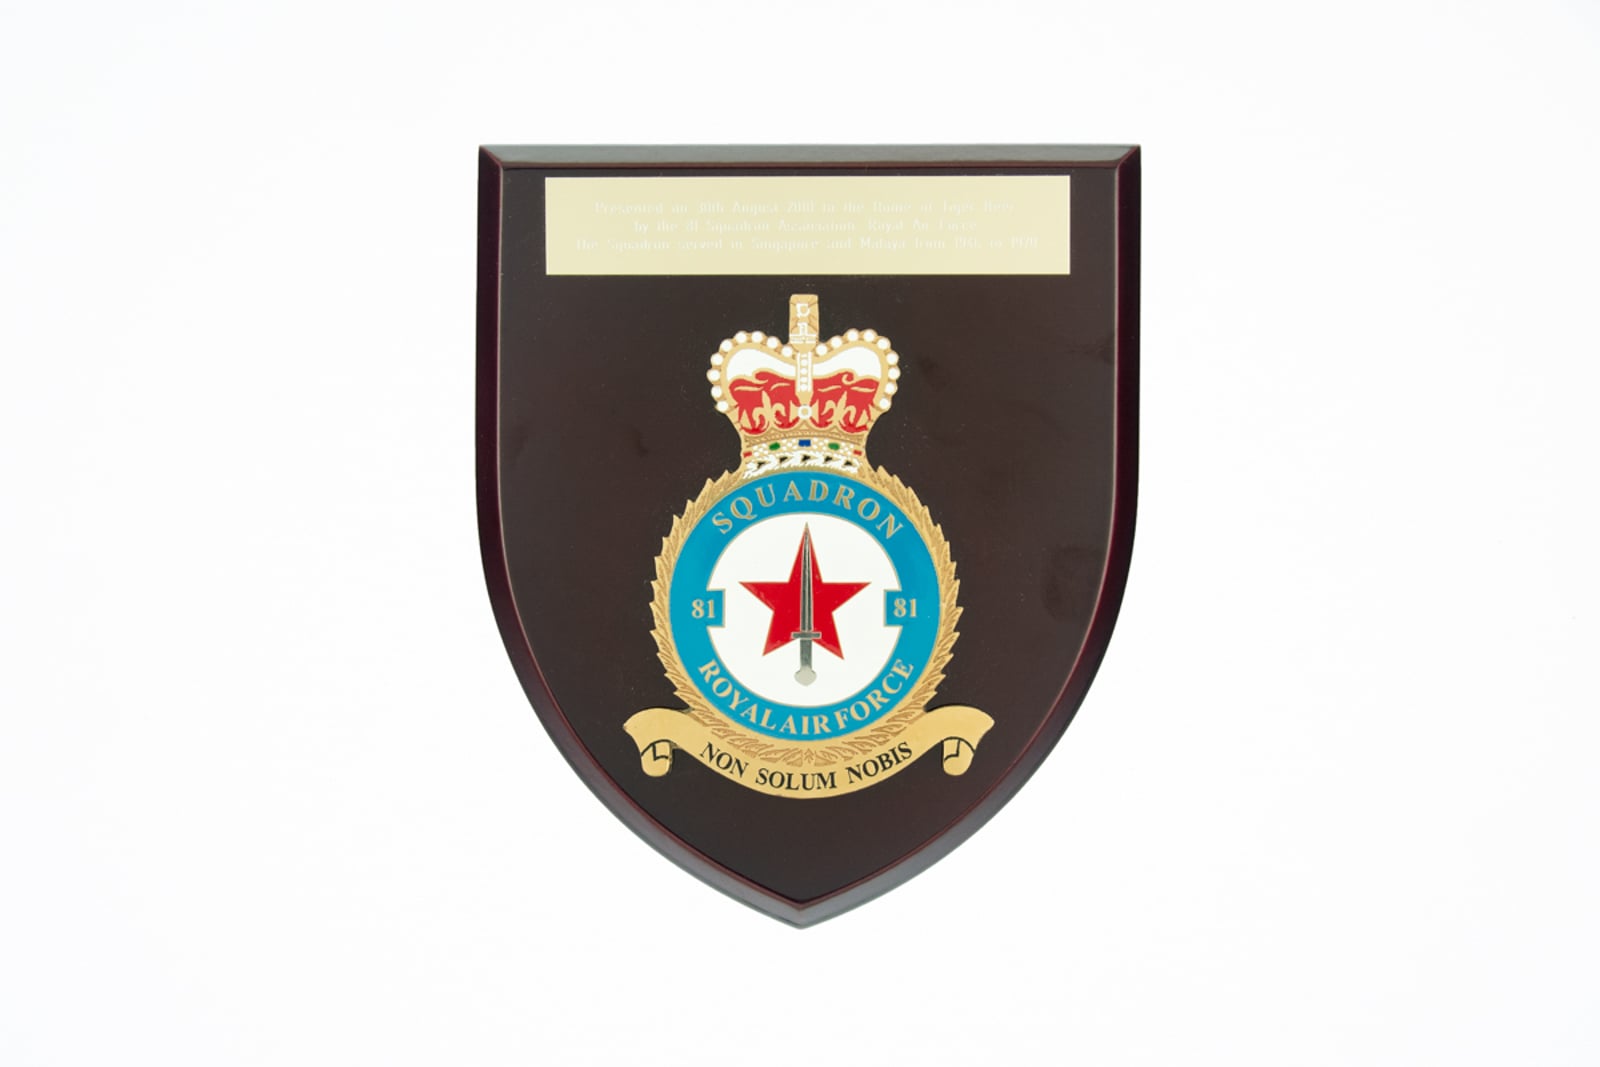 Squadron 81 Royal Airforce Plaque